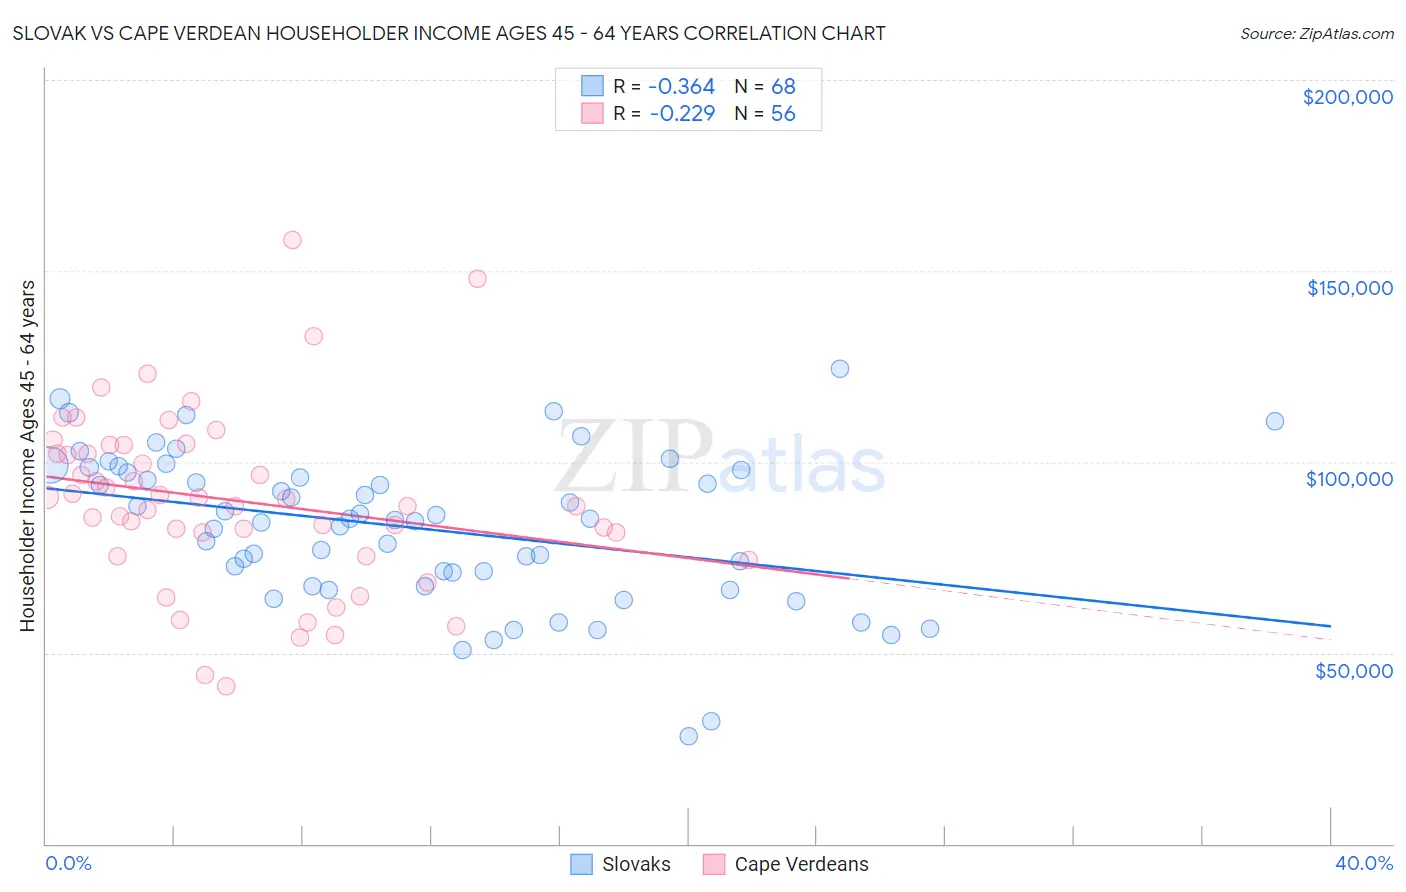 Slovak vs Cape Verdean Householder Income Ages 45 - 64 years